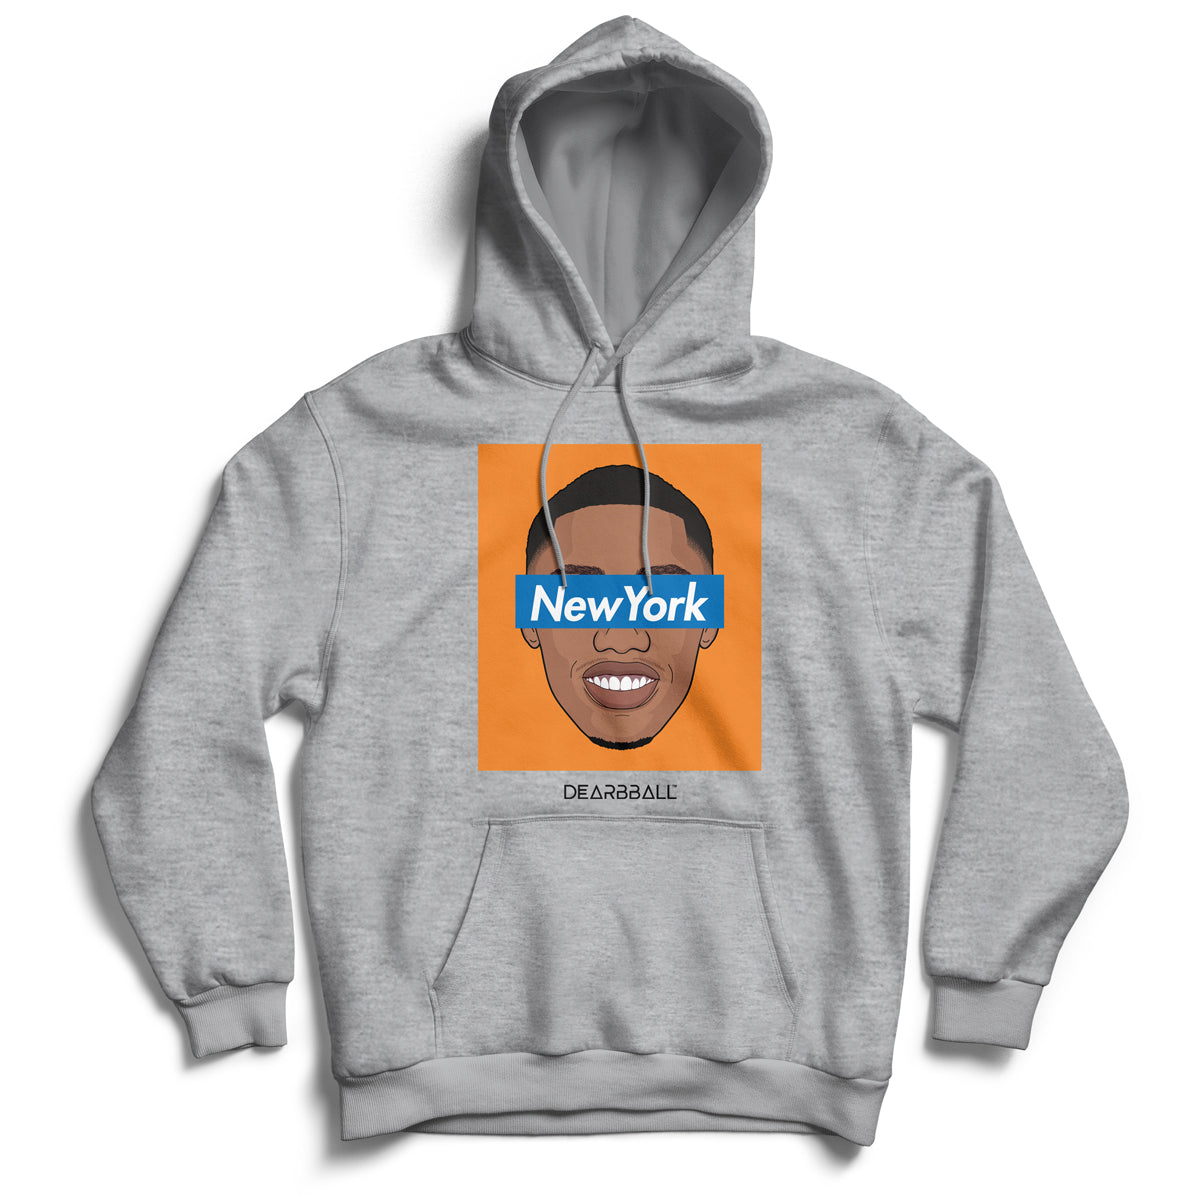 RJ_Barrett_hoodie_NEW_YORK_New_York_Knicks_dearbball_black